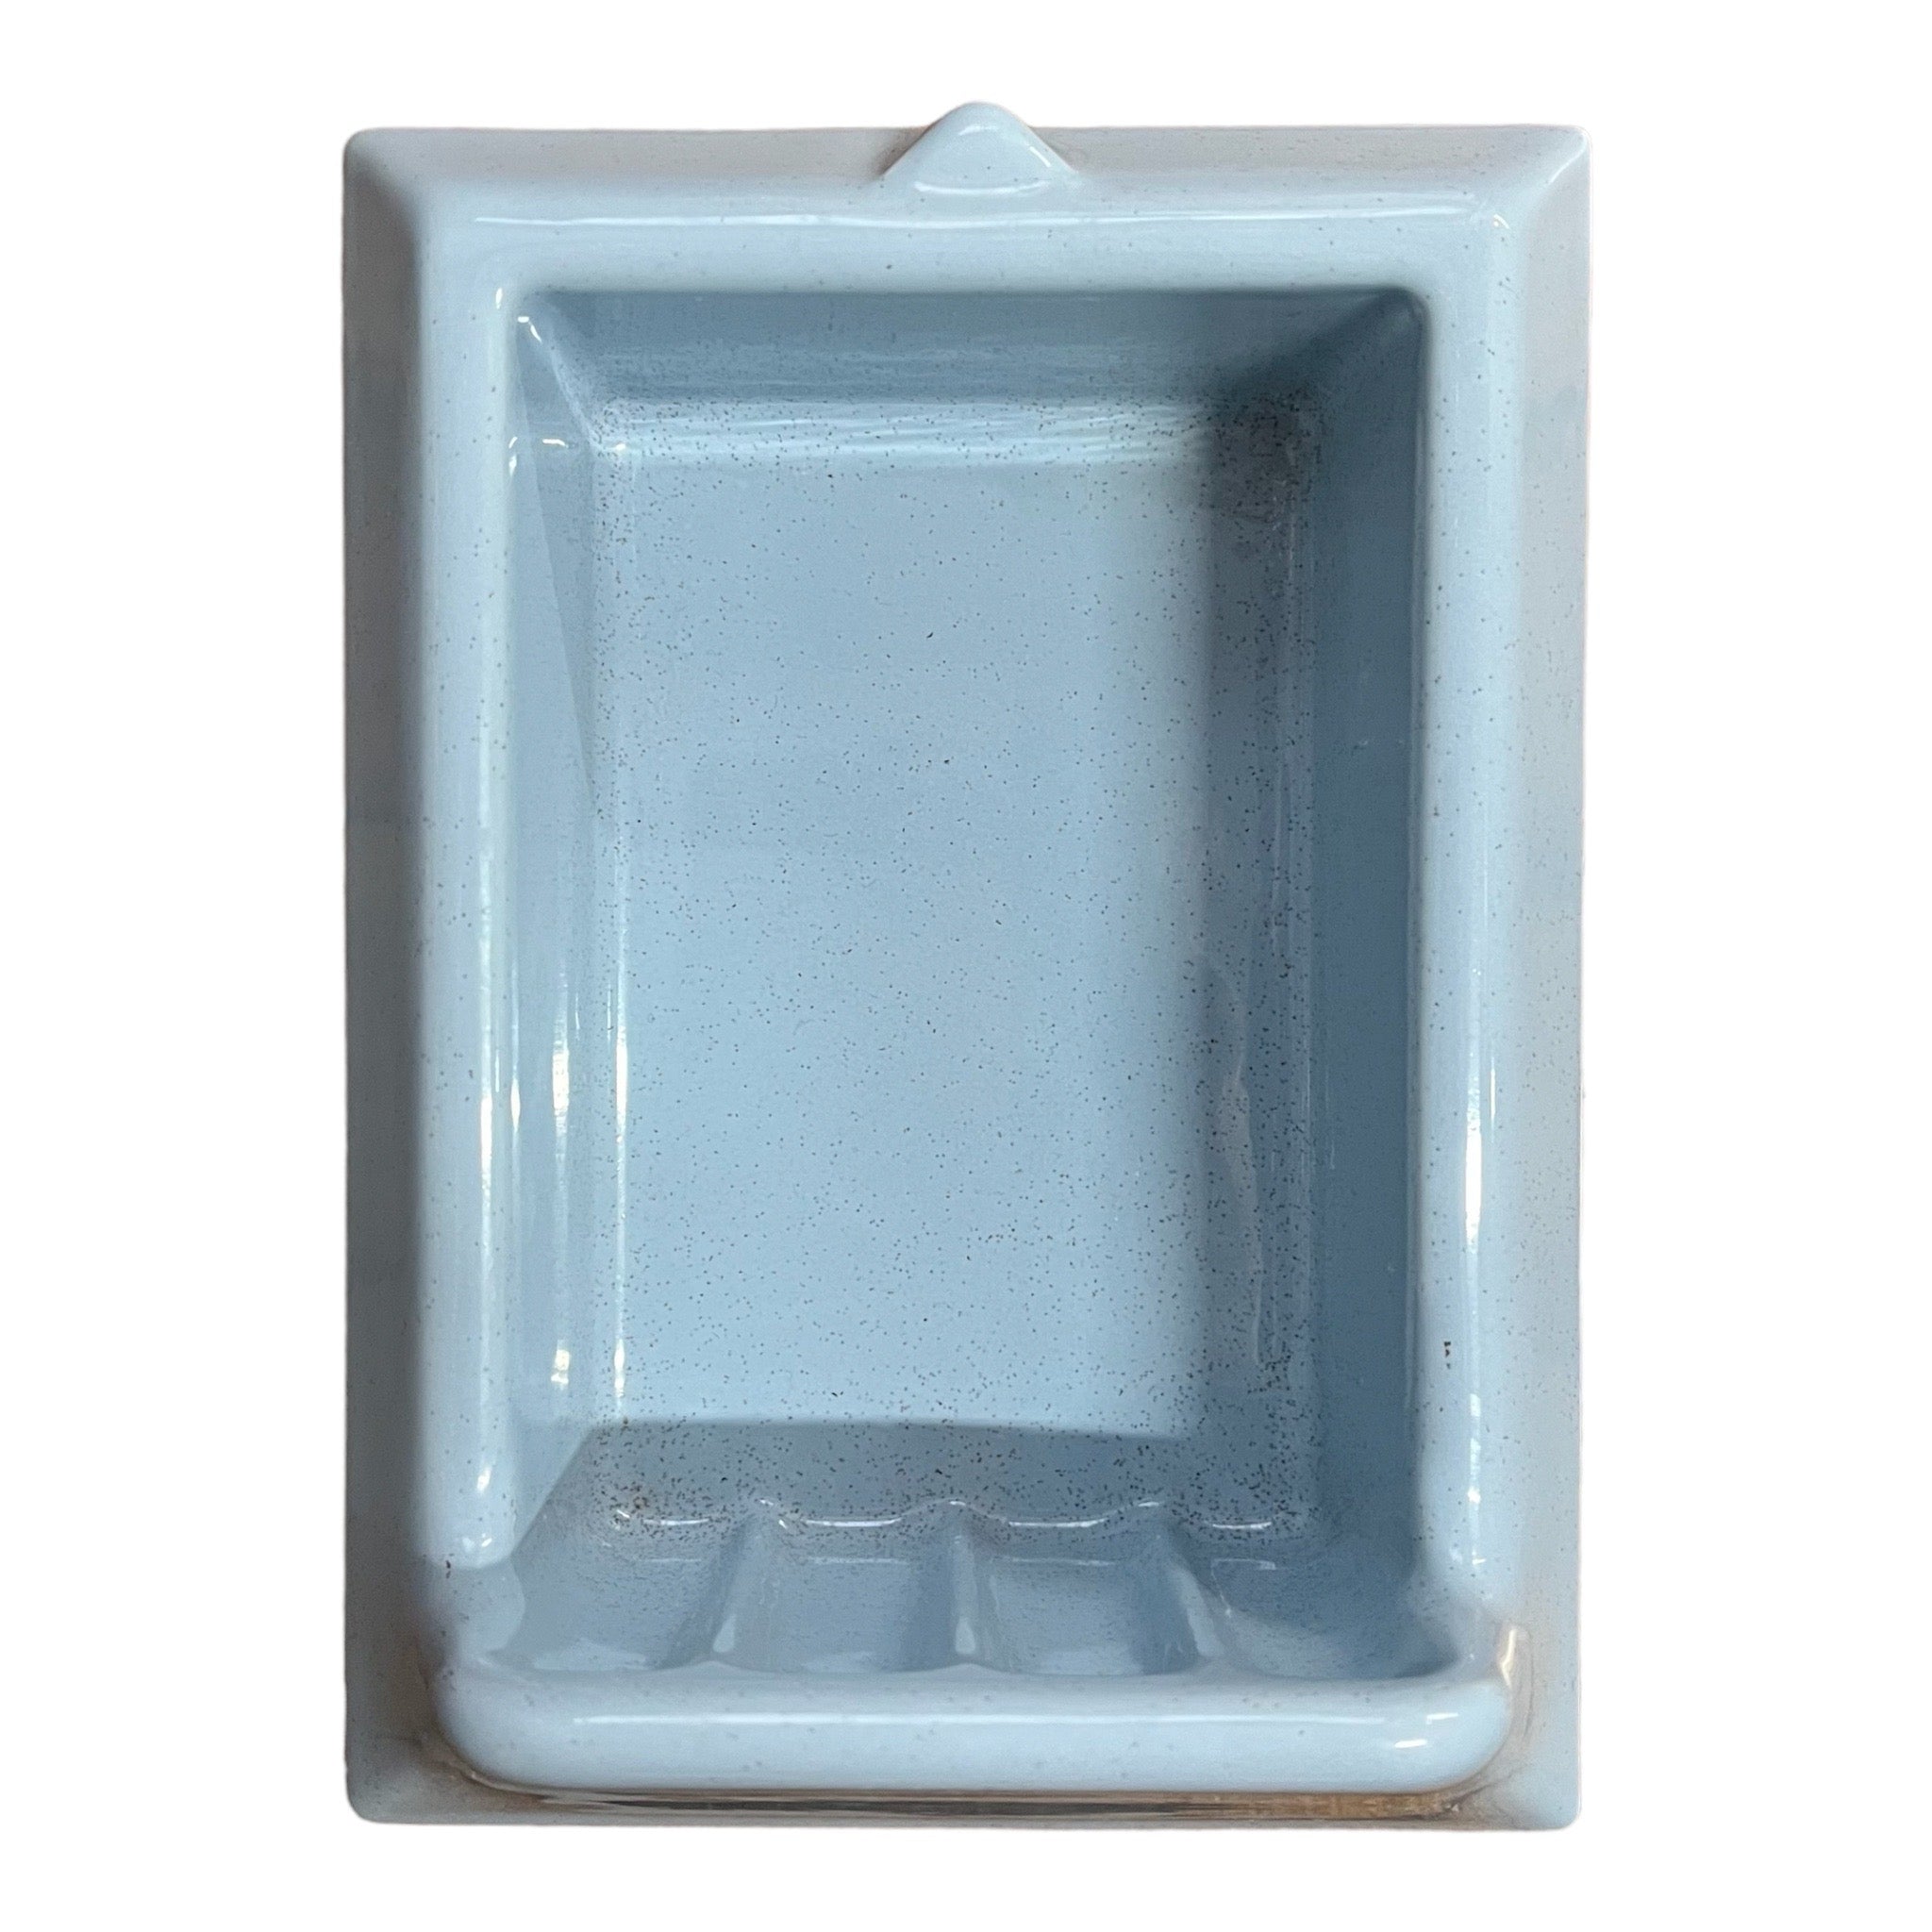 Vintage Blue Porcelain Tile-In Soap Dish With Ridges